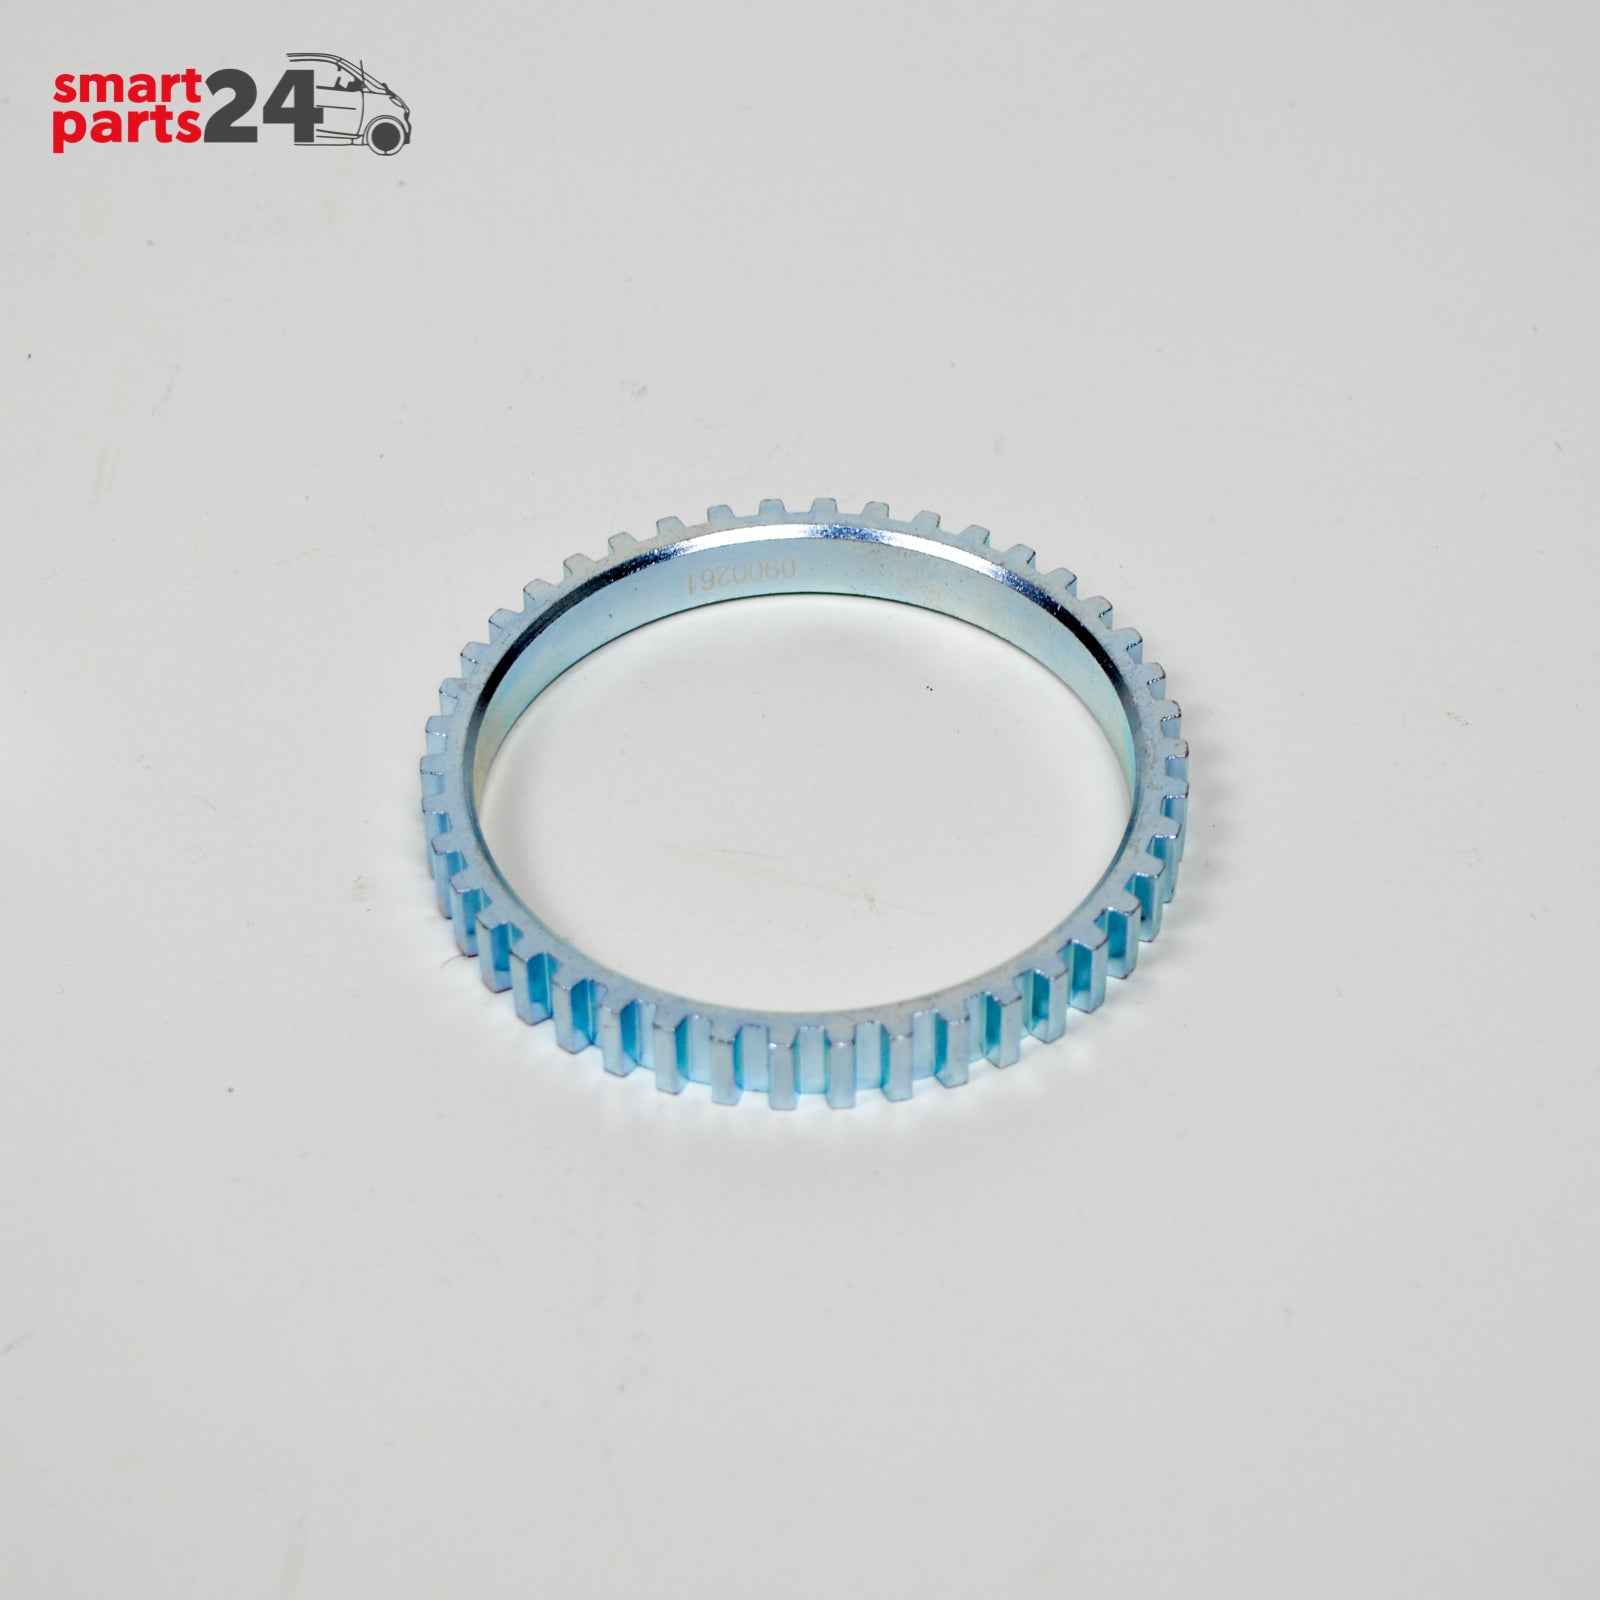 Smart Fortwo 450 sensor ring ABS ring